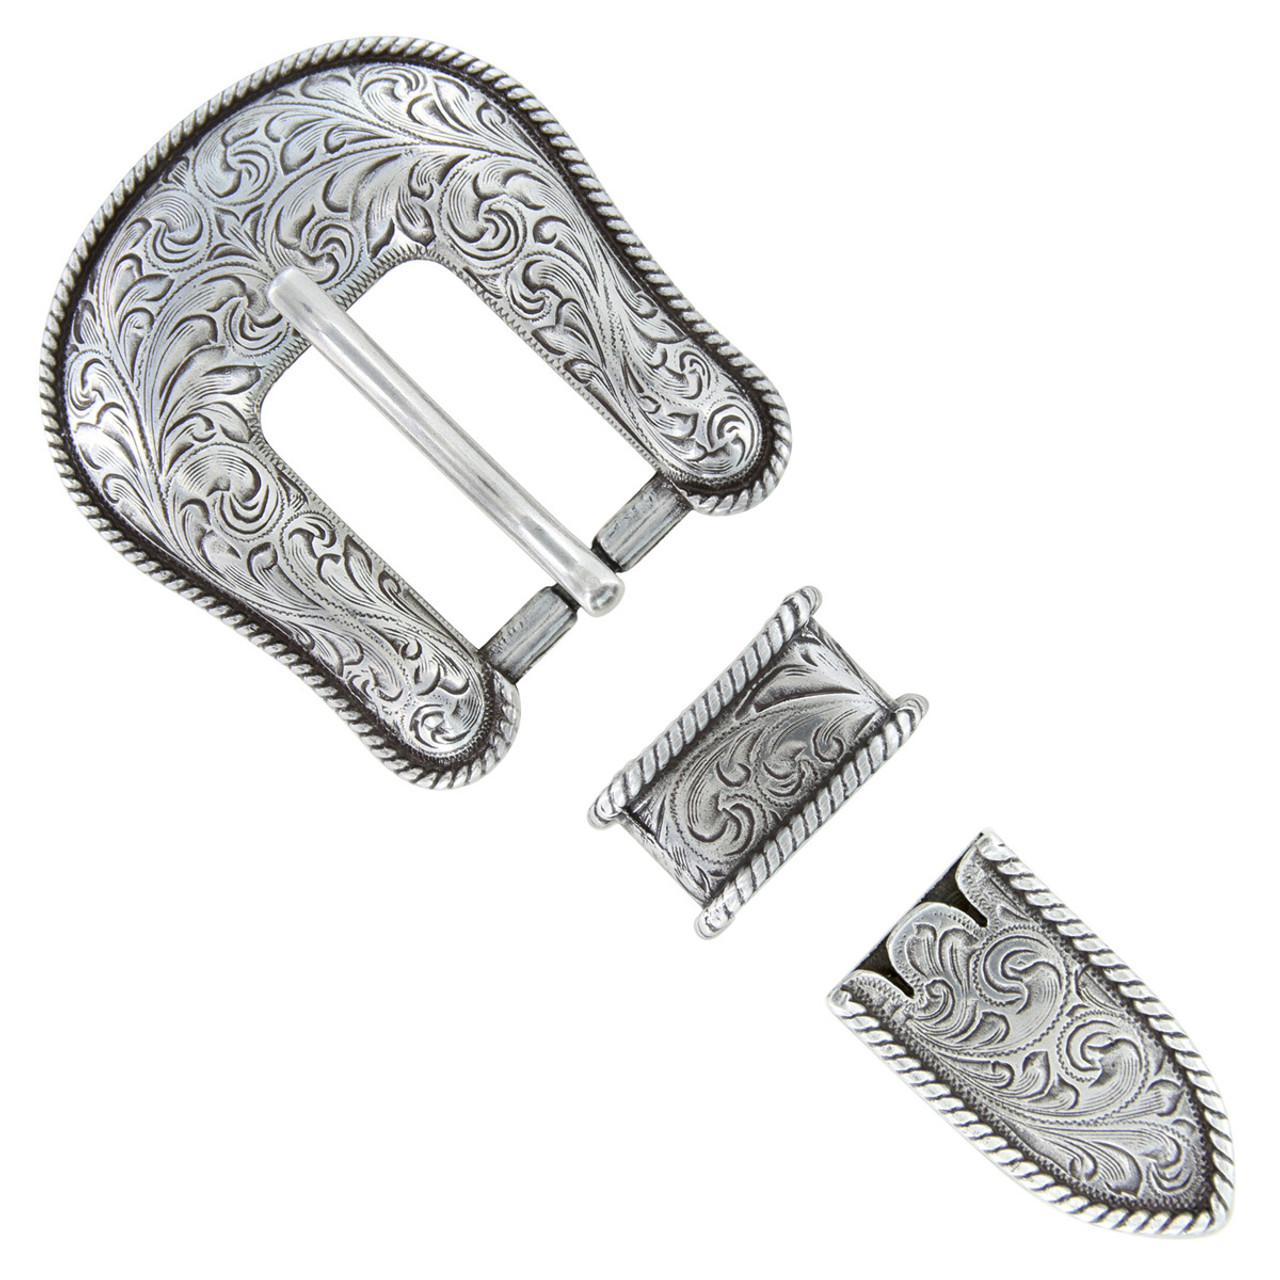 Western Belt Buckle 3 Piece Set Antiqued Silver